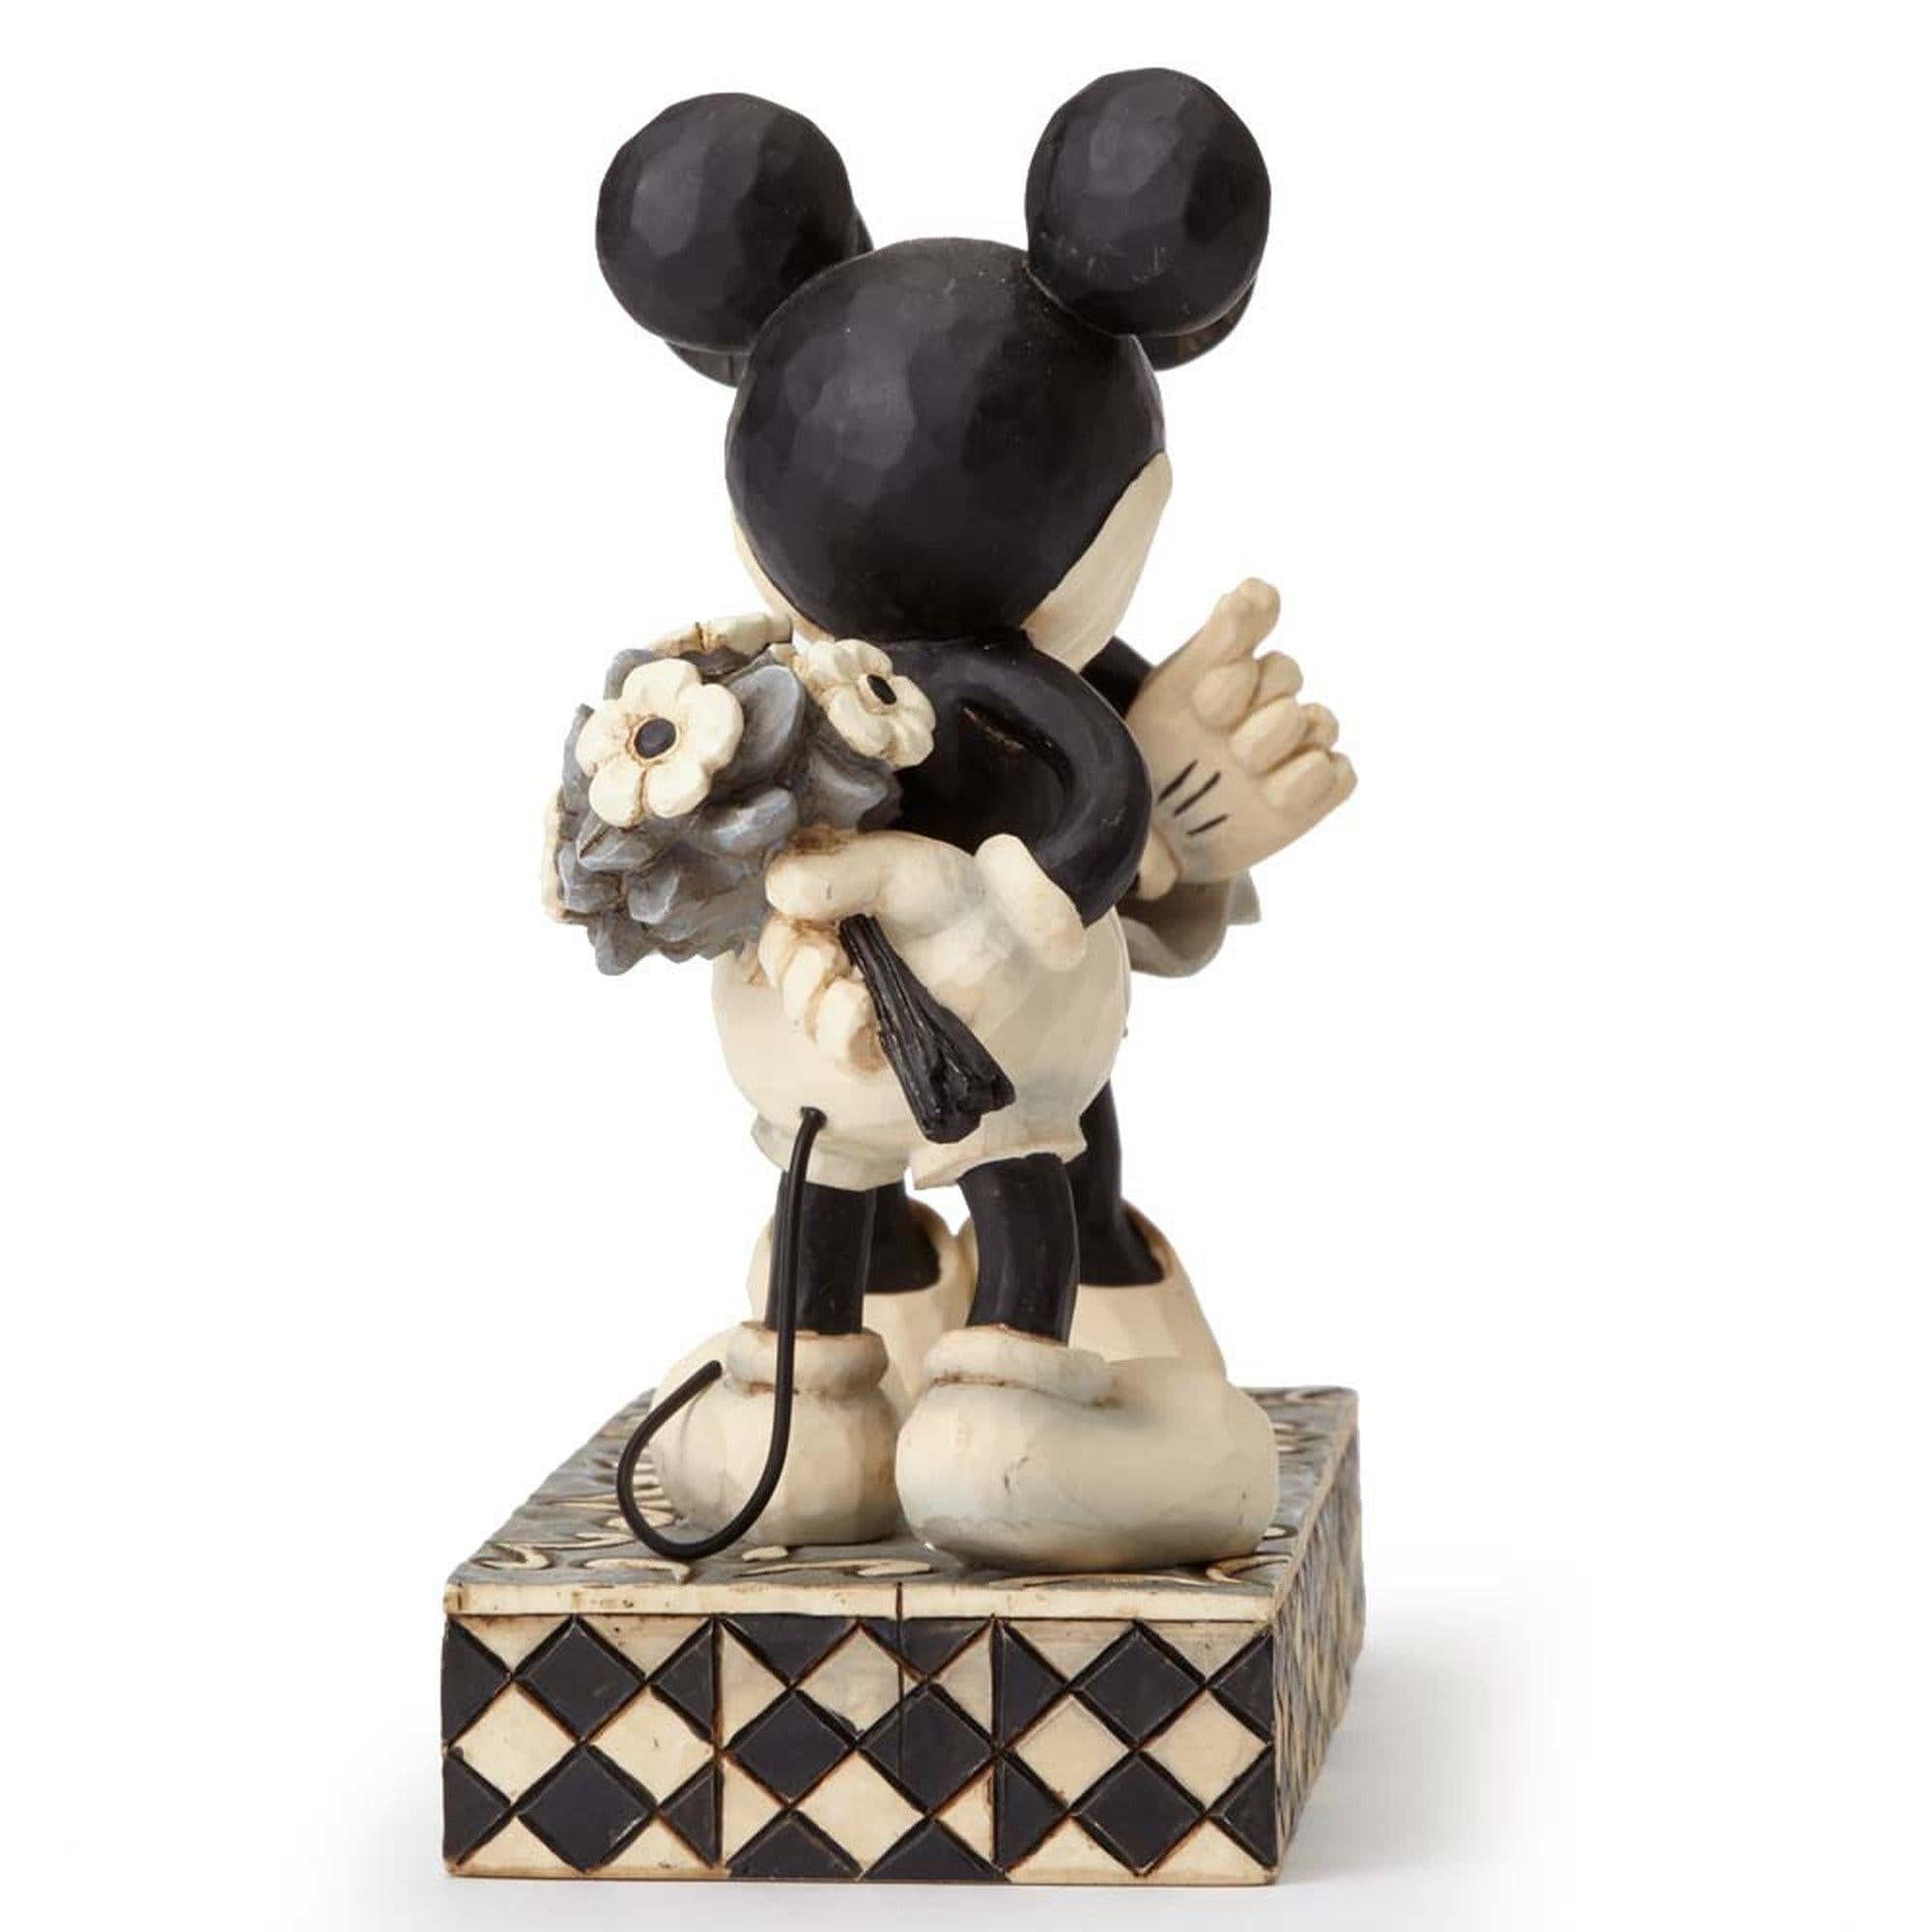 Enesco Disney Ornament Disney Traditions Figurine - Real Sweetheart - Mickey & Minnie Mouse Figurine